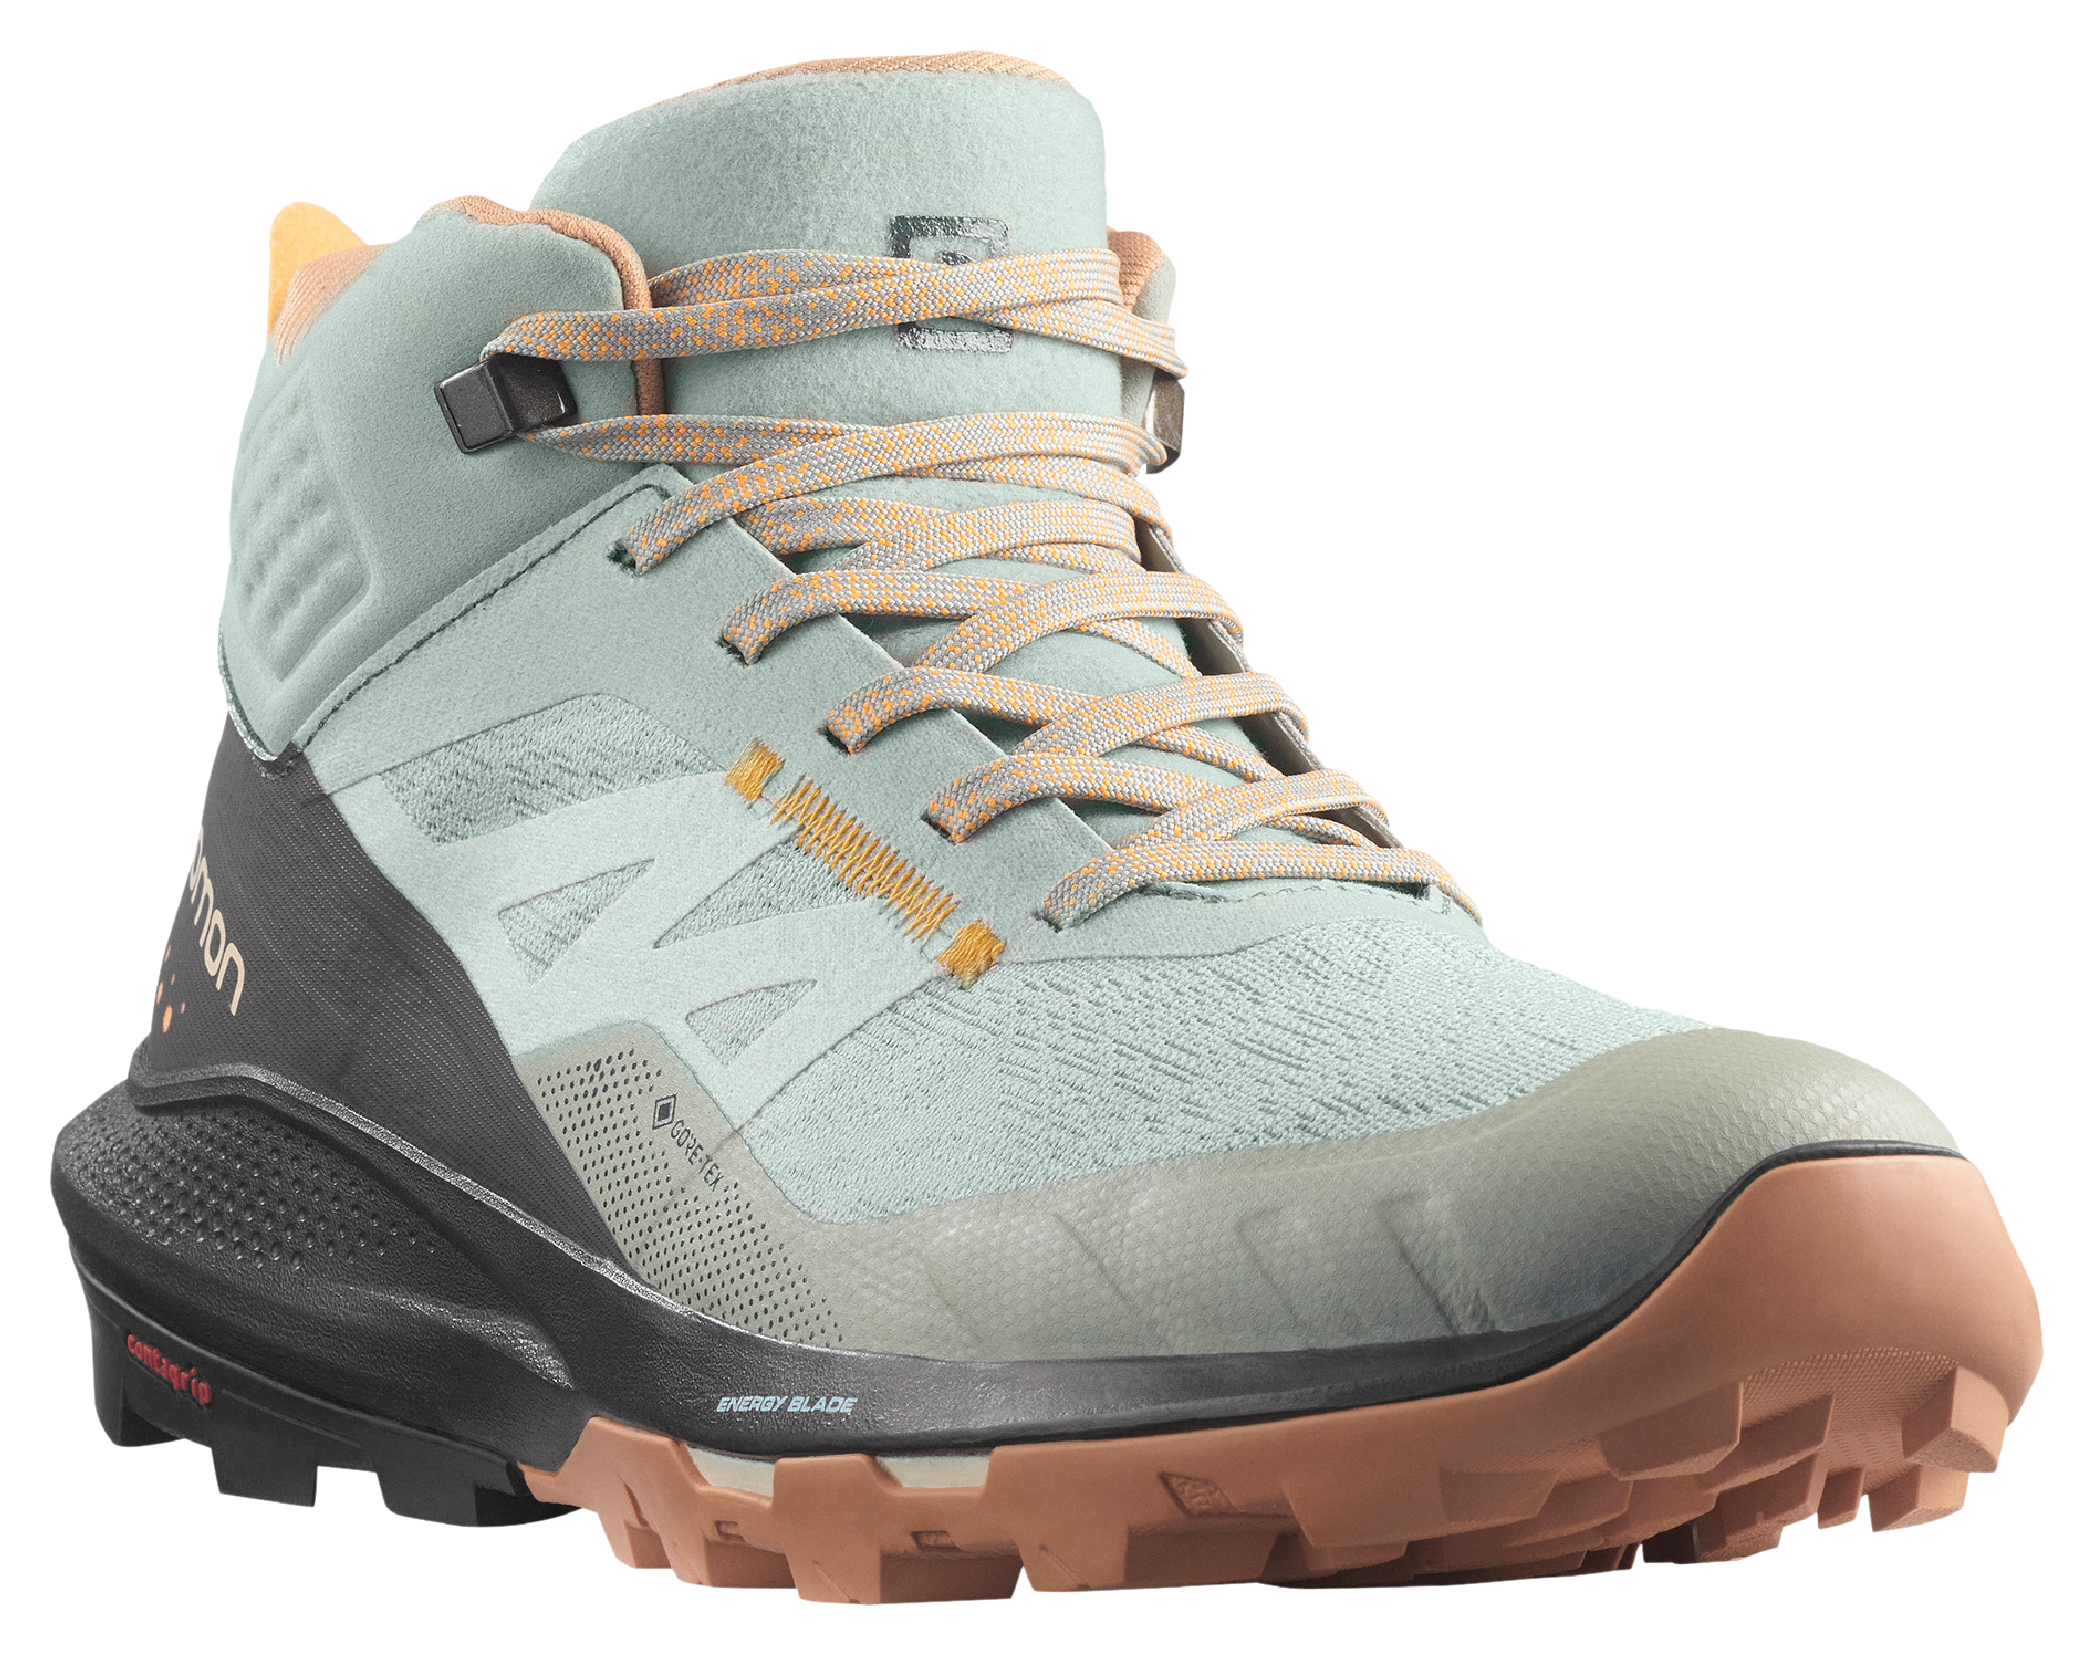 Salomon Outpulse Mid GORE-TEX Hiking Boots for Ladies - Wrought Iron/Ebony/Blaze Orange - 7.5M